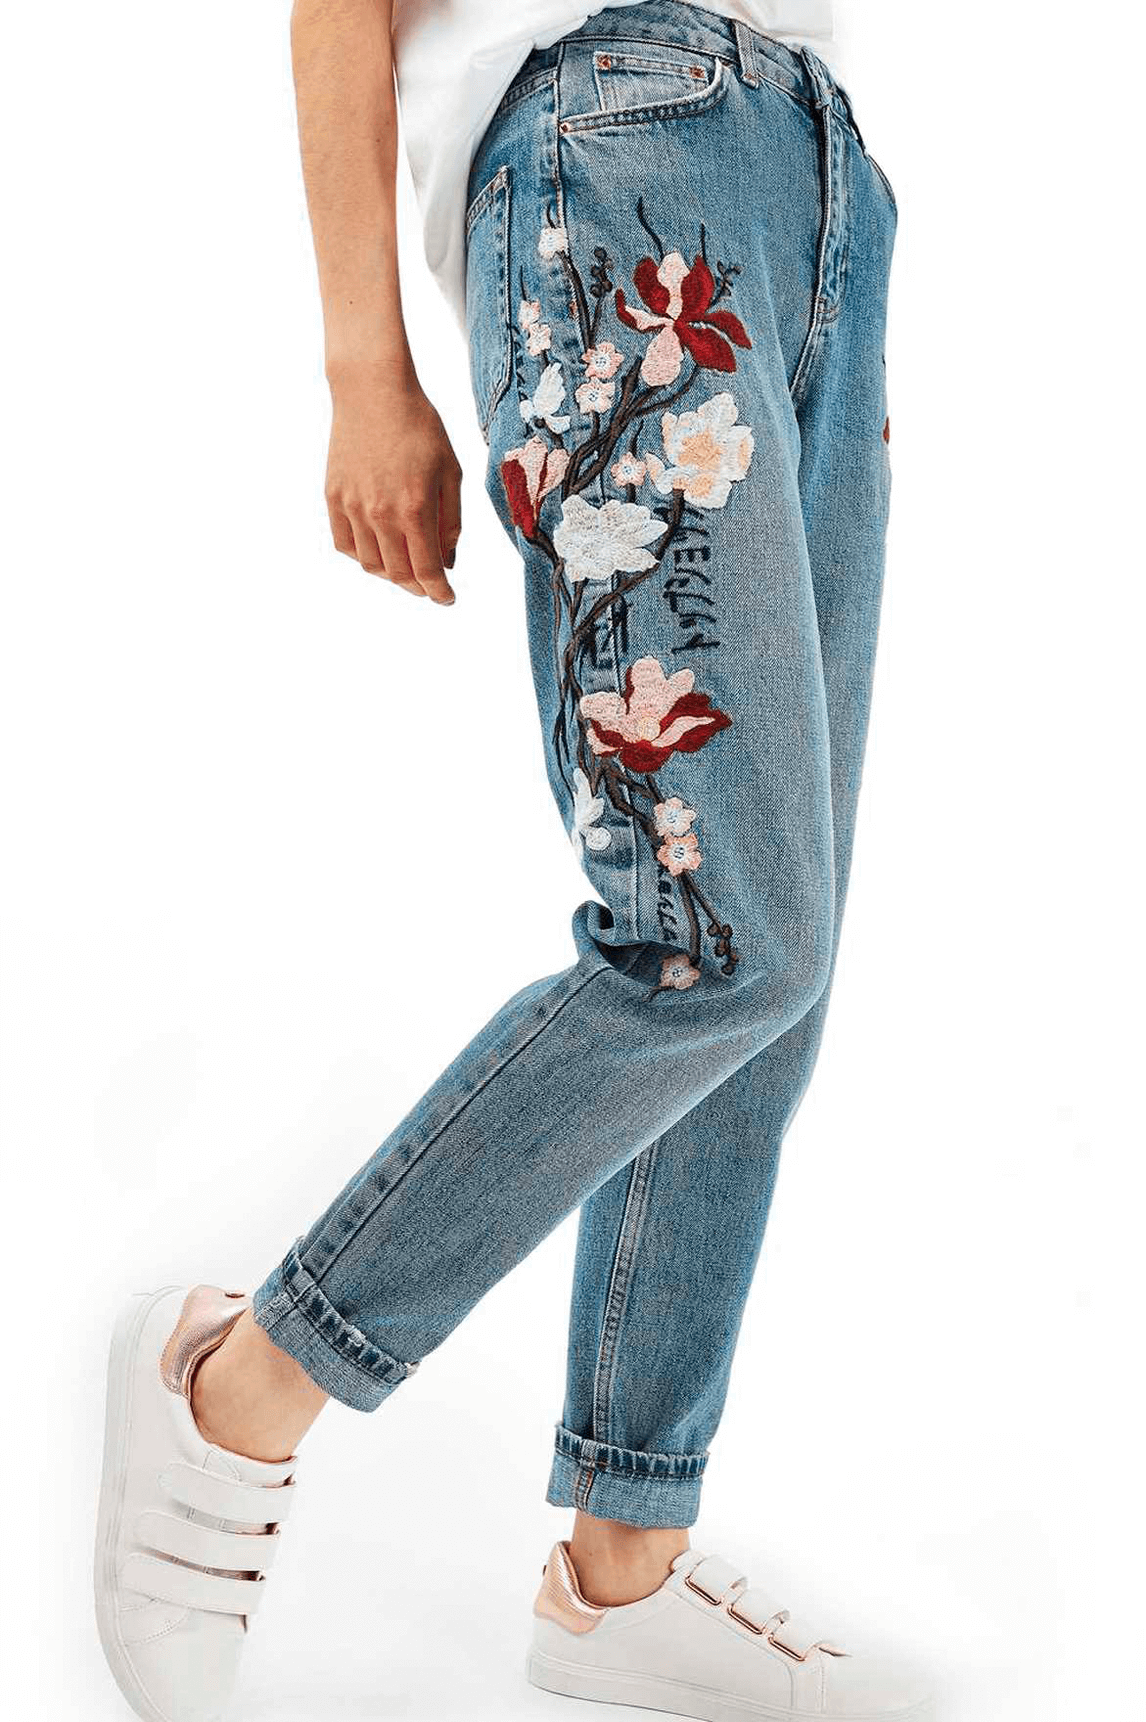 Malentendido pegar modo customiza-pantalones-flores-bordadas-jeans - Handfie DIY